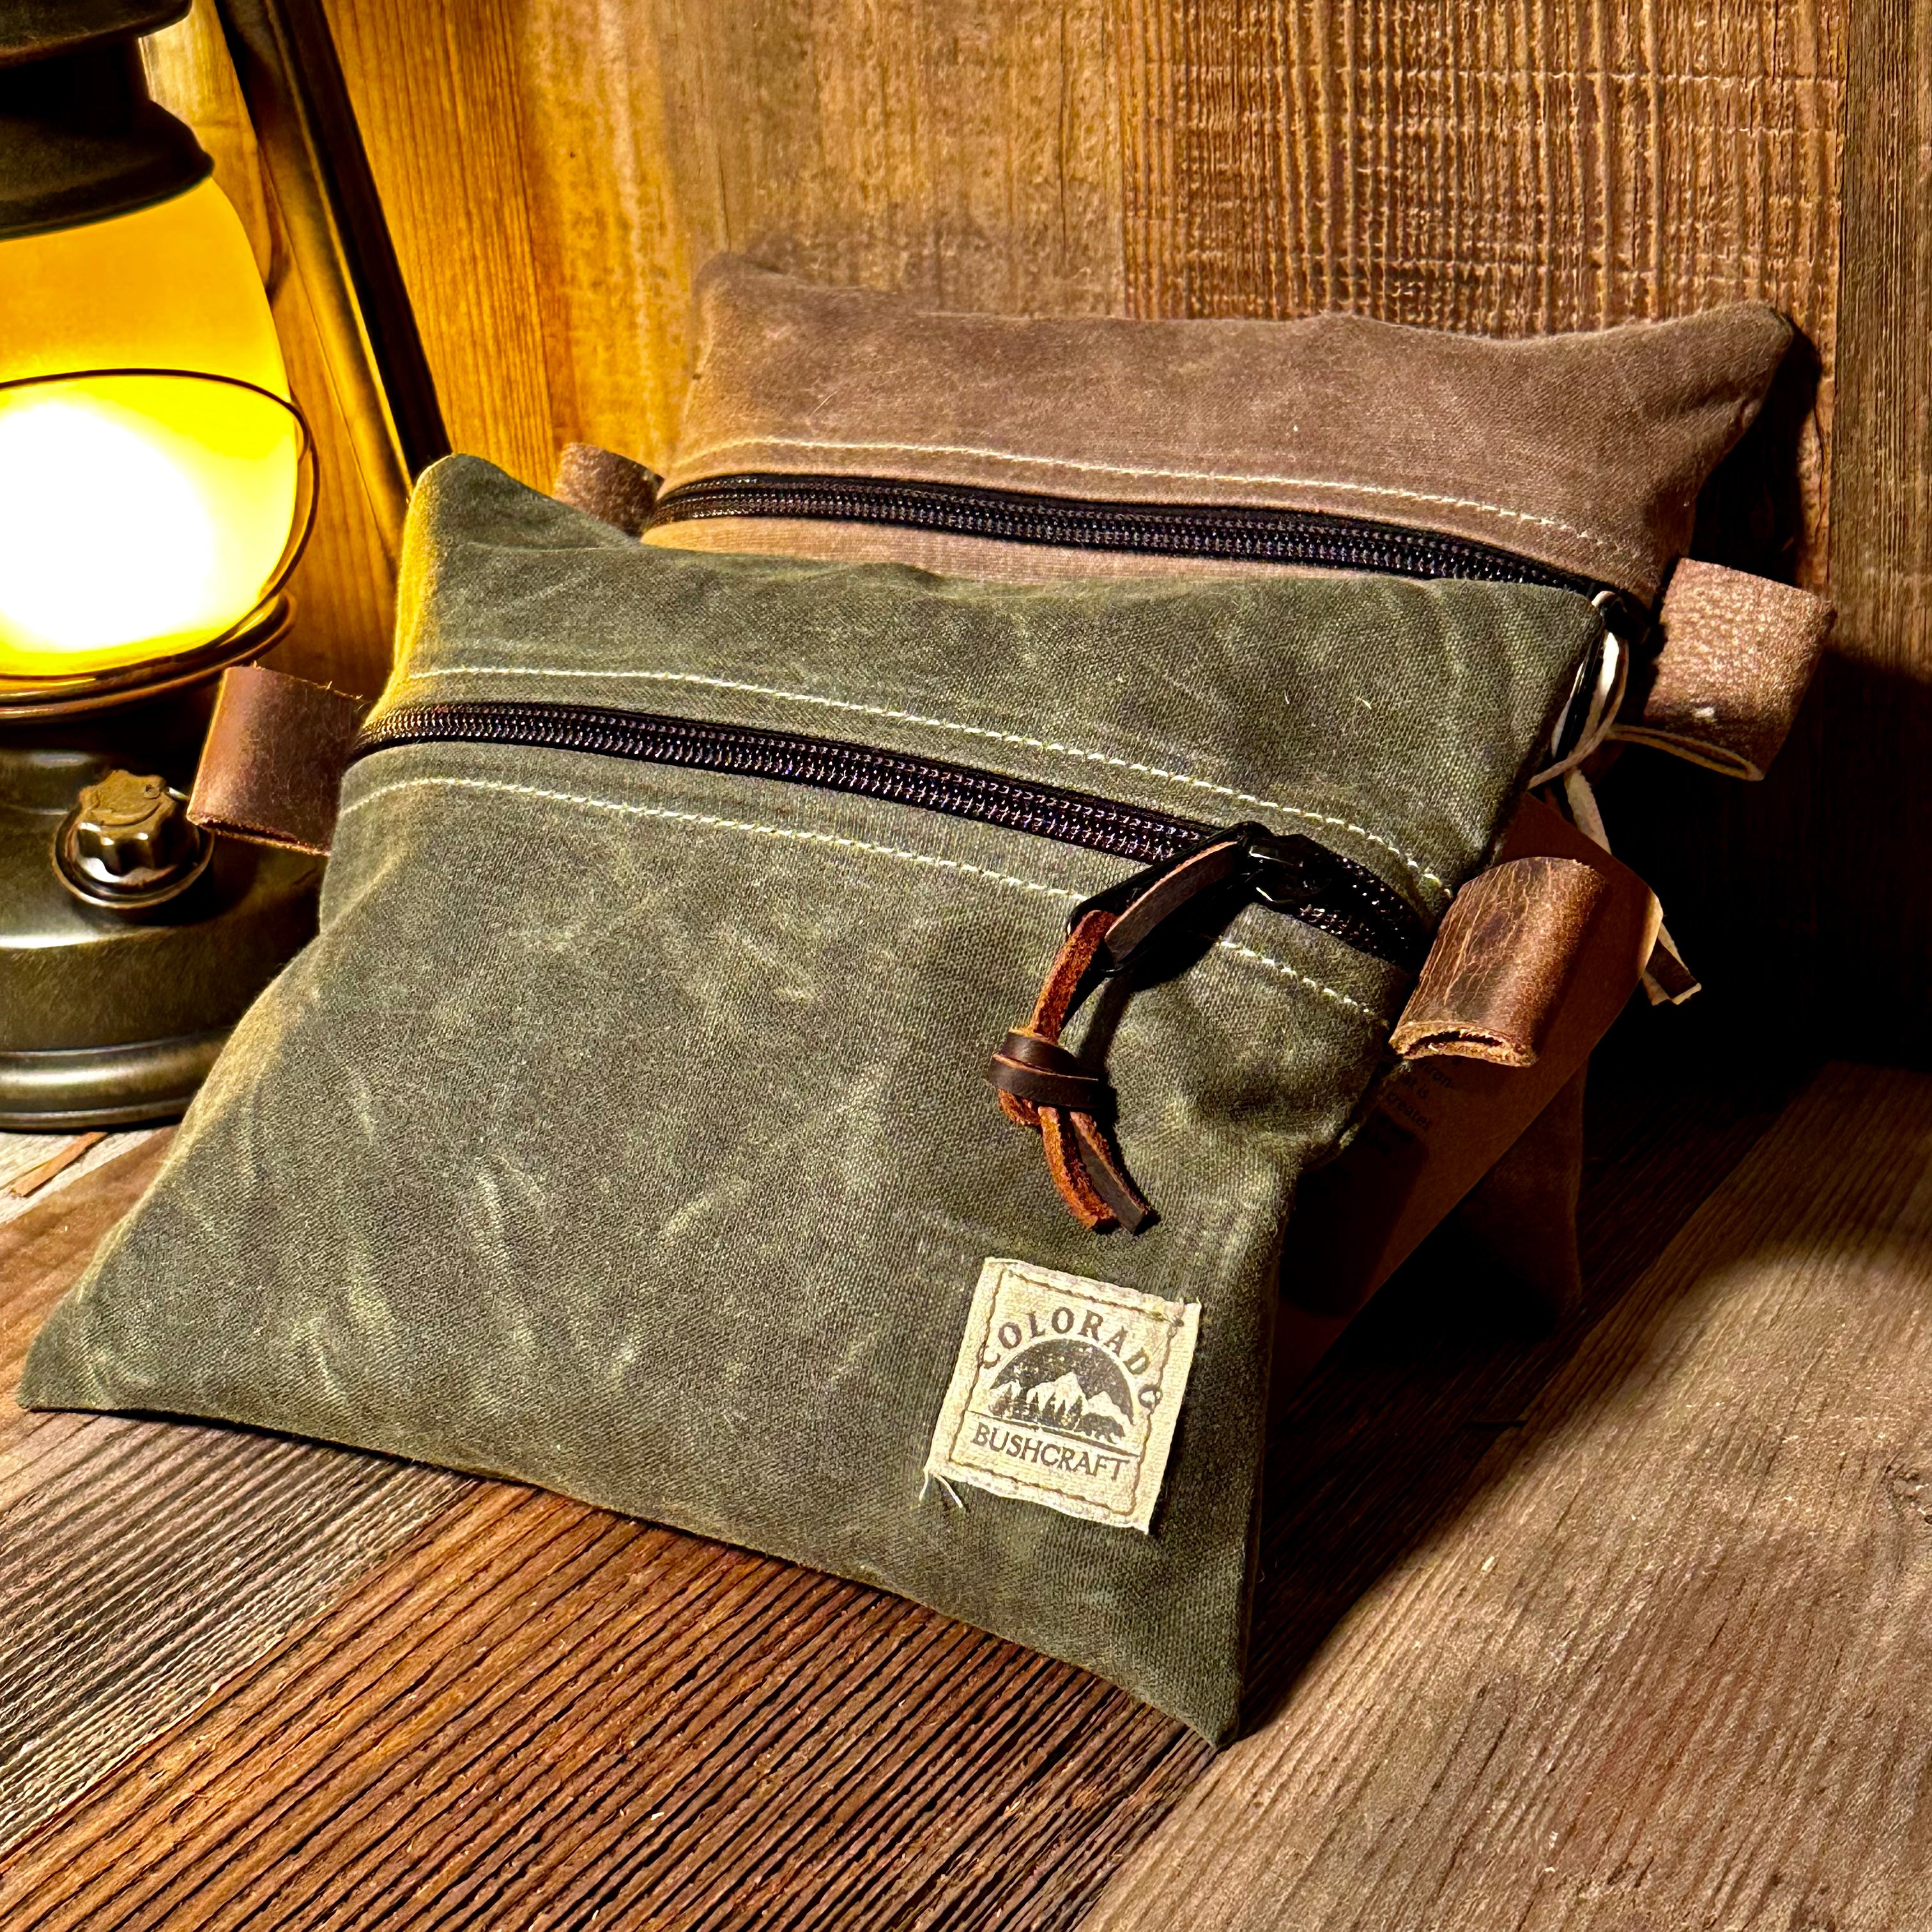 Bushcraft handmade leather belt pouch and 2 oz tinder box